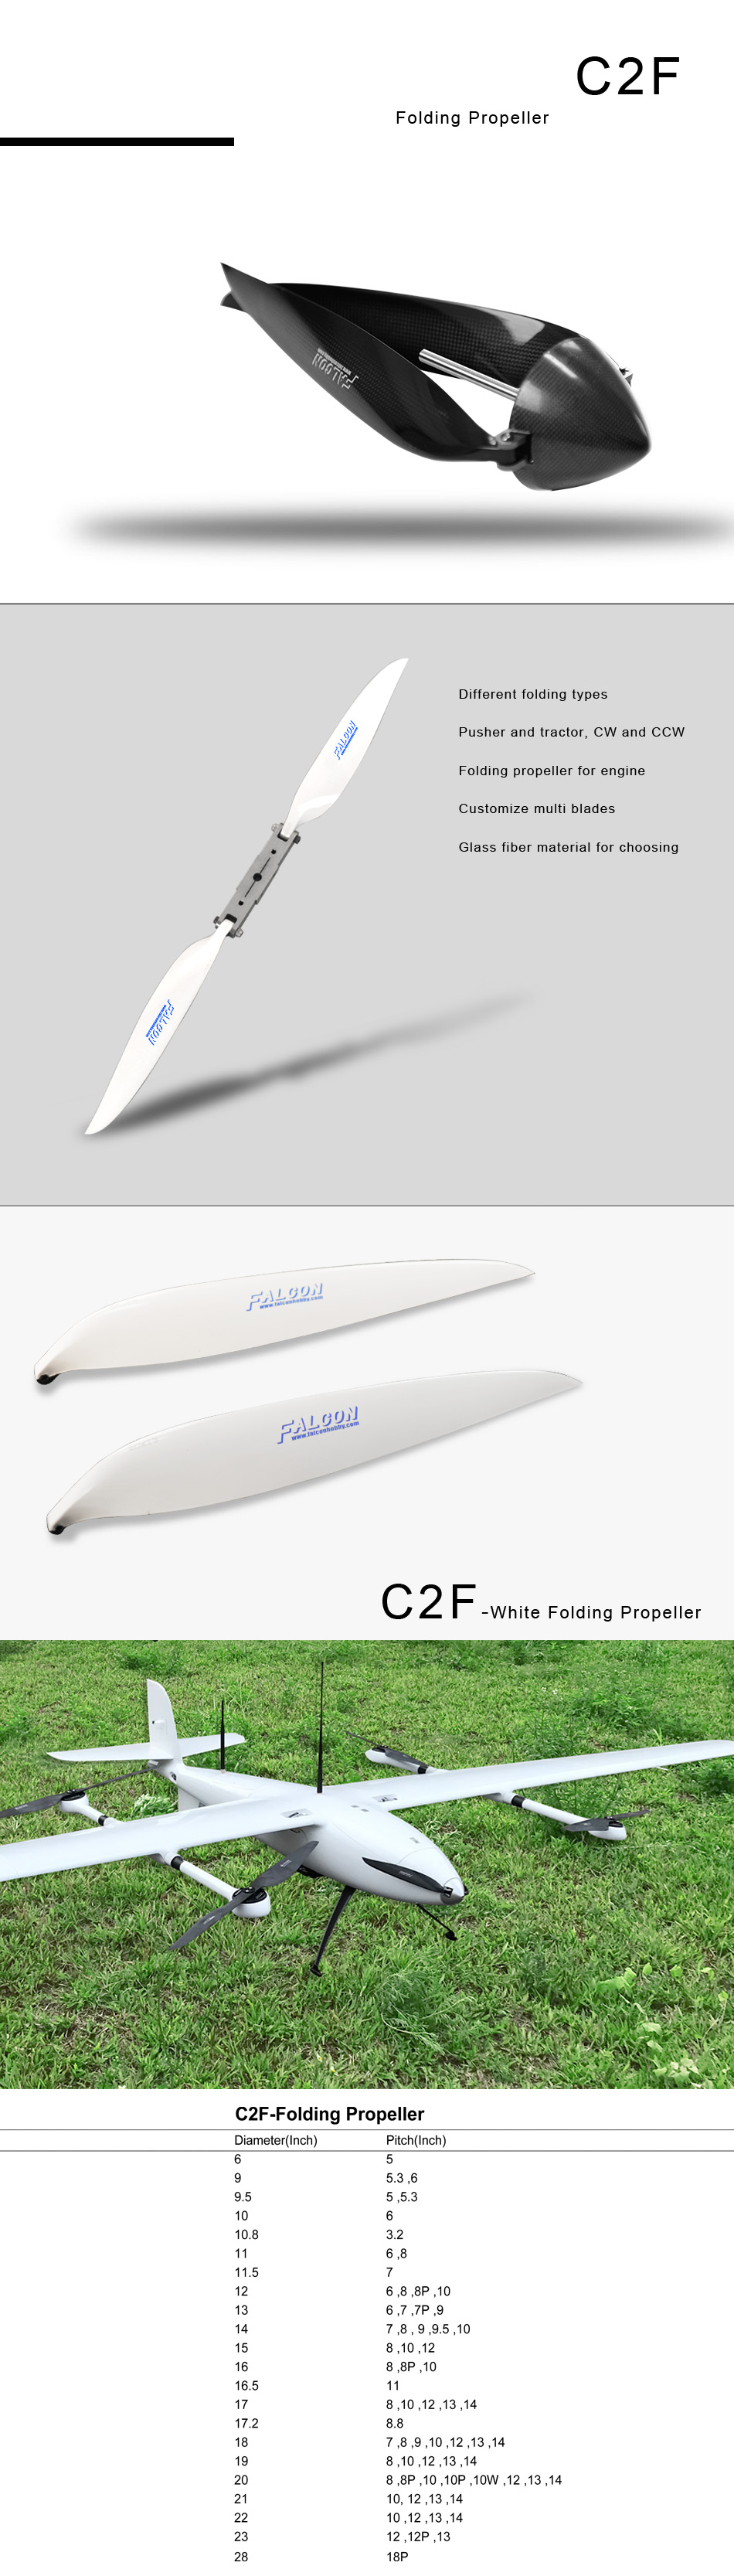 C2F-无人机 增加了规格